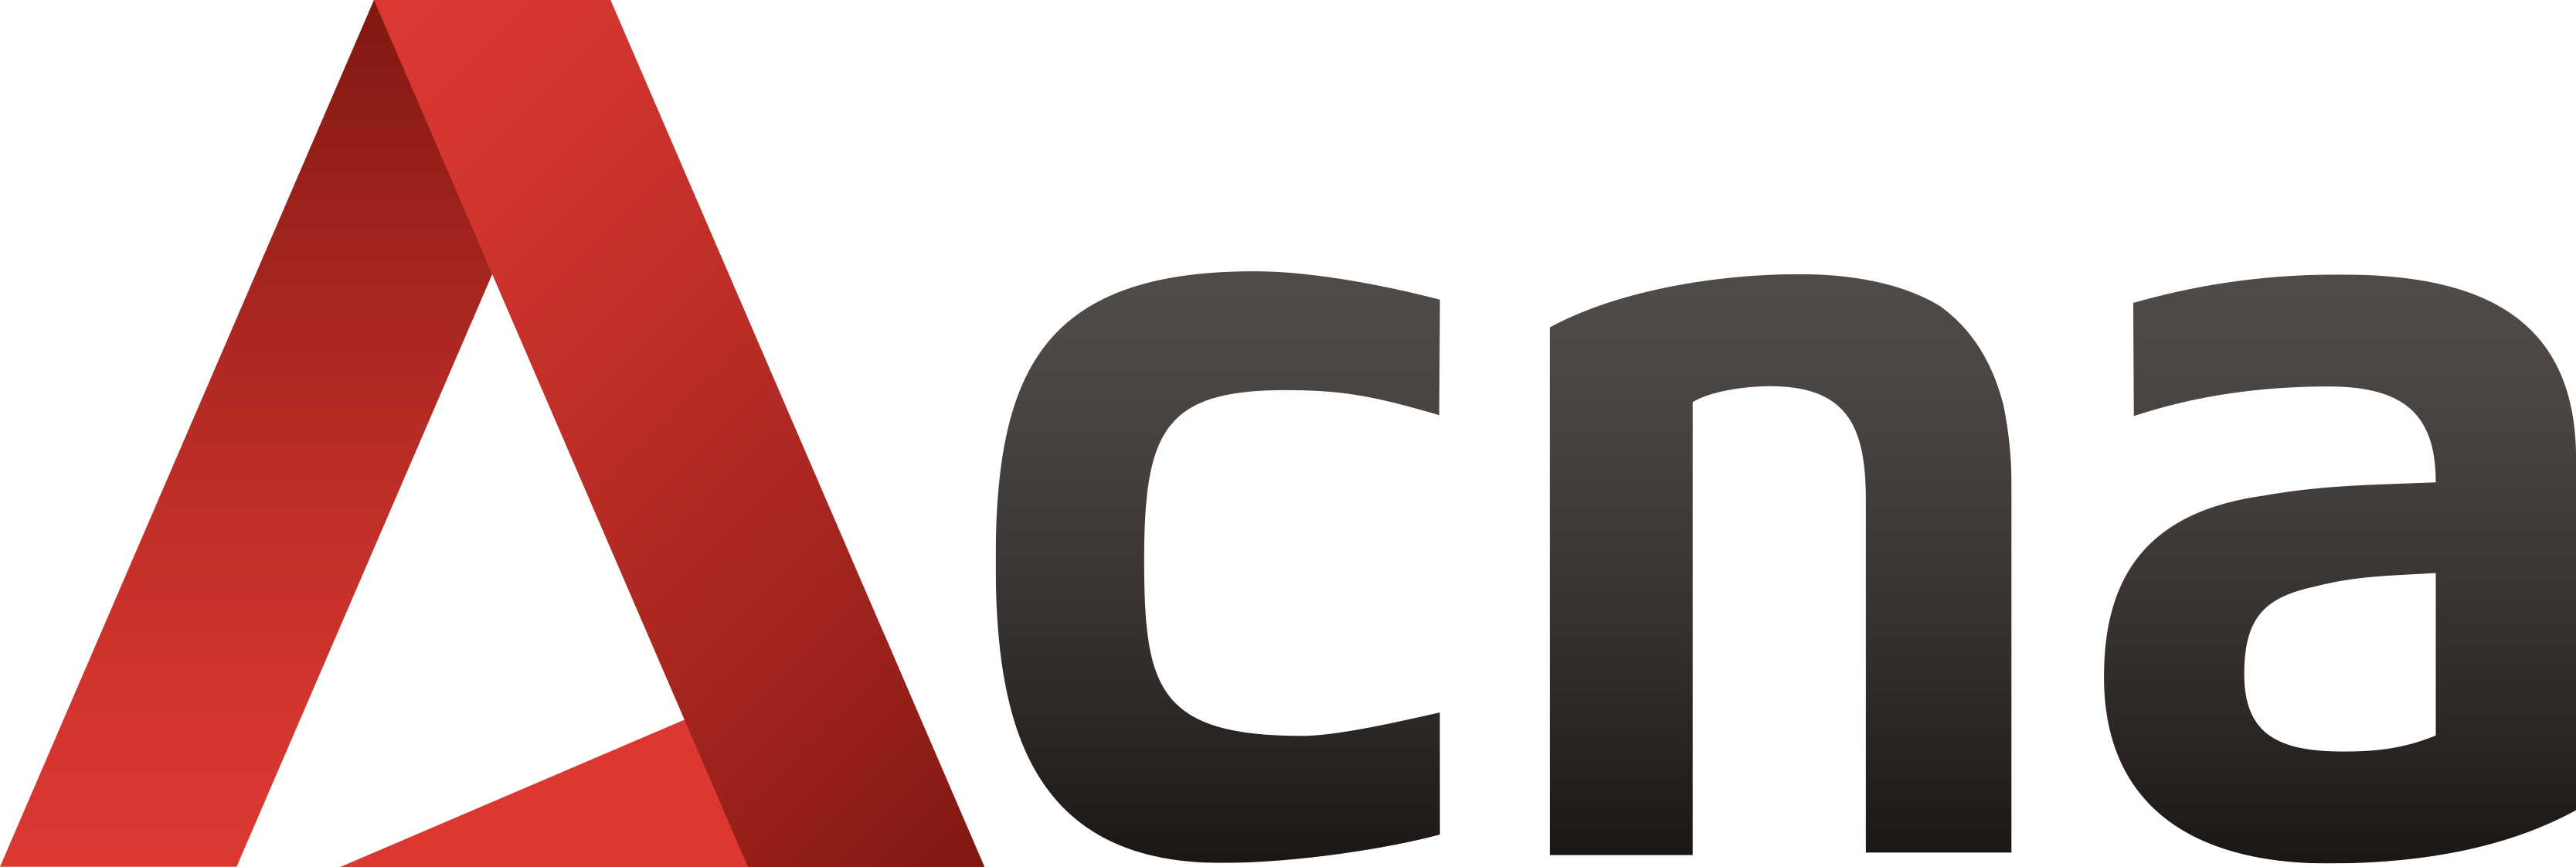 High-res logo of CNA.